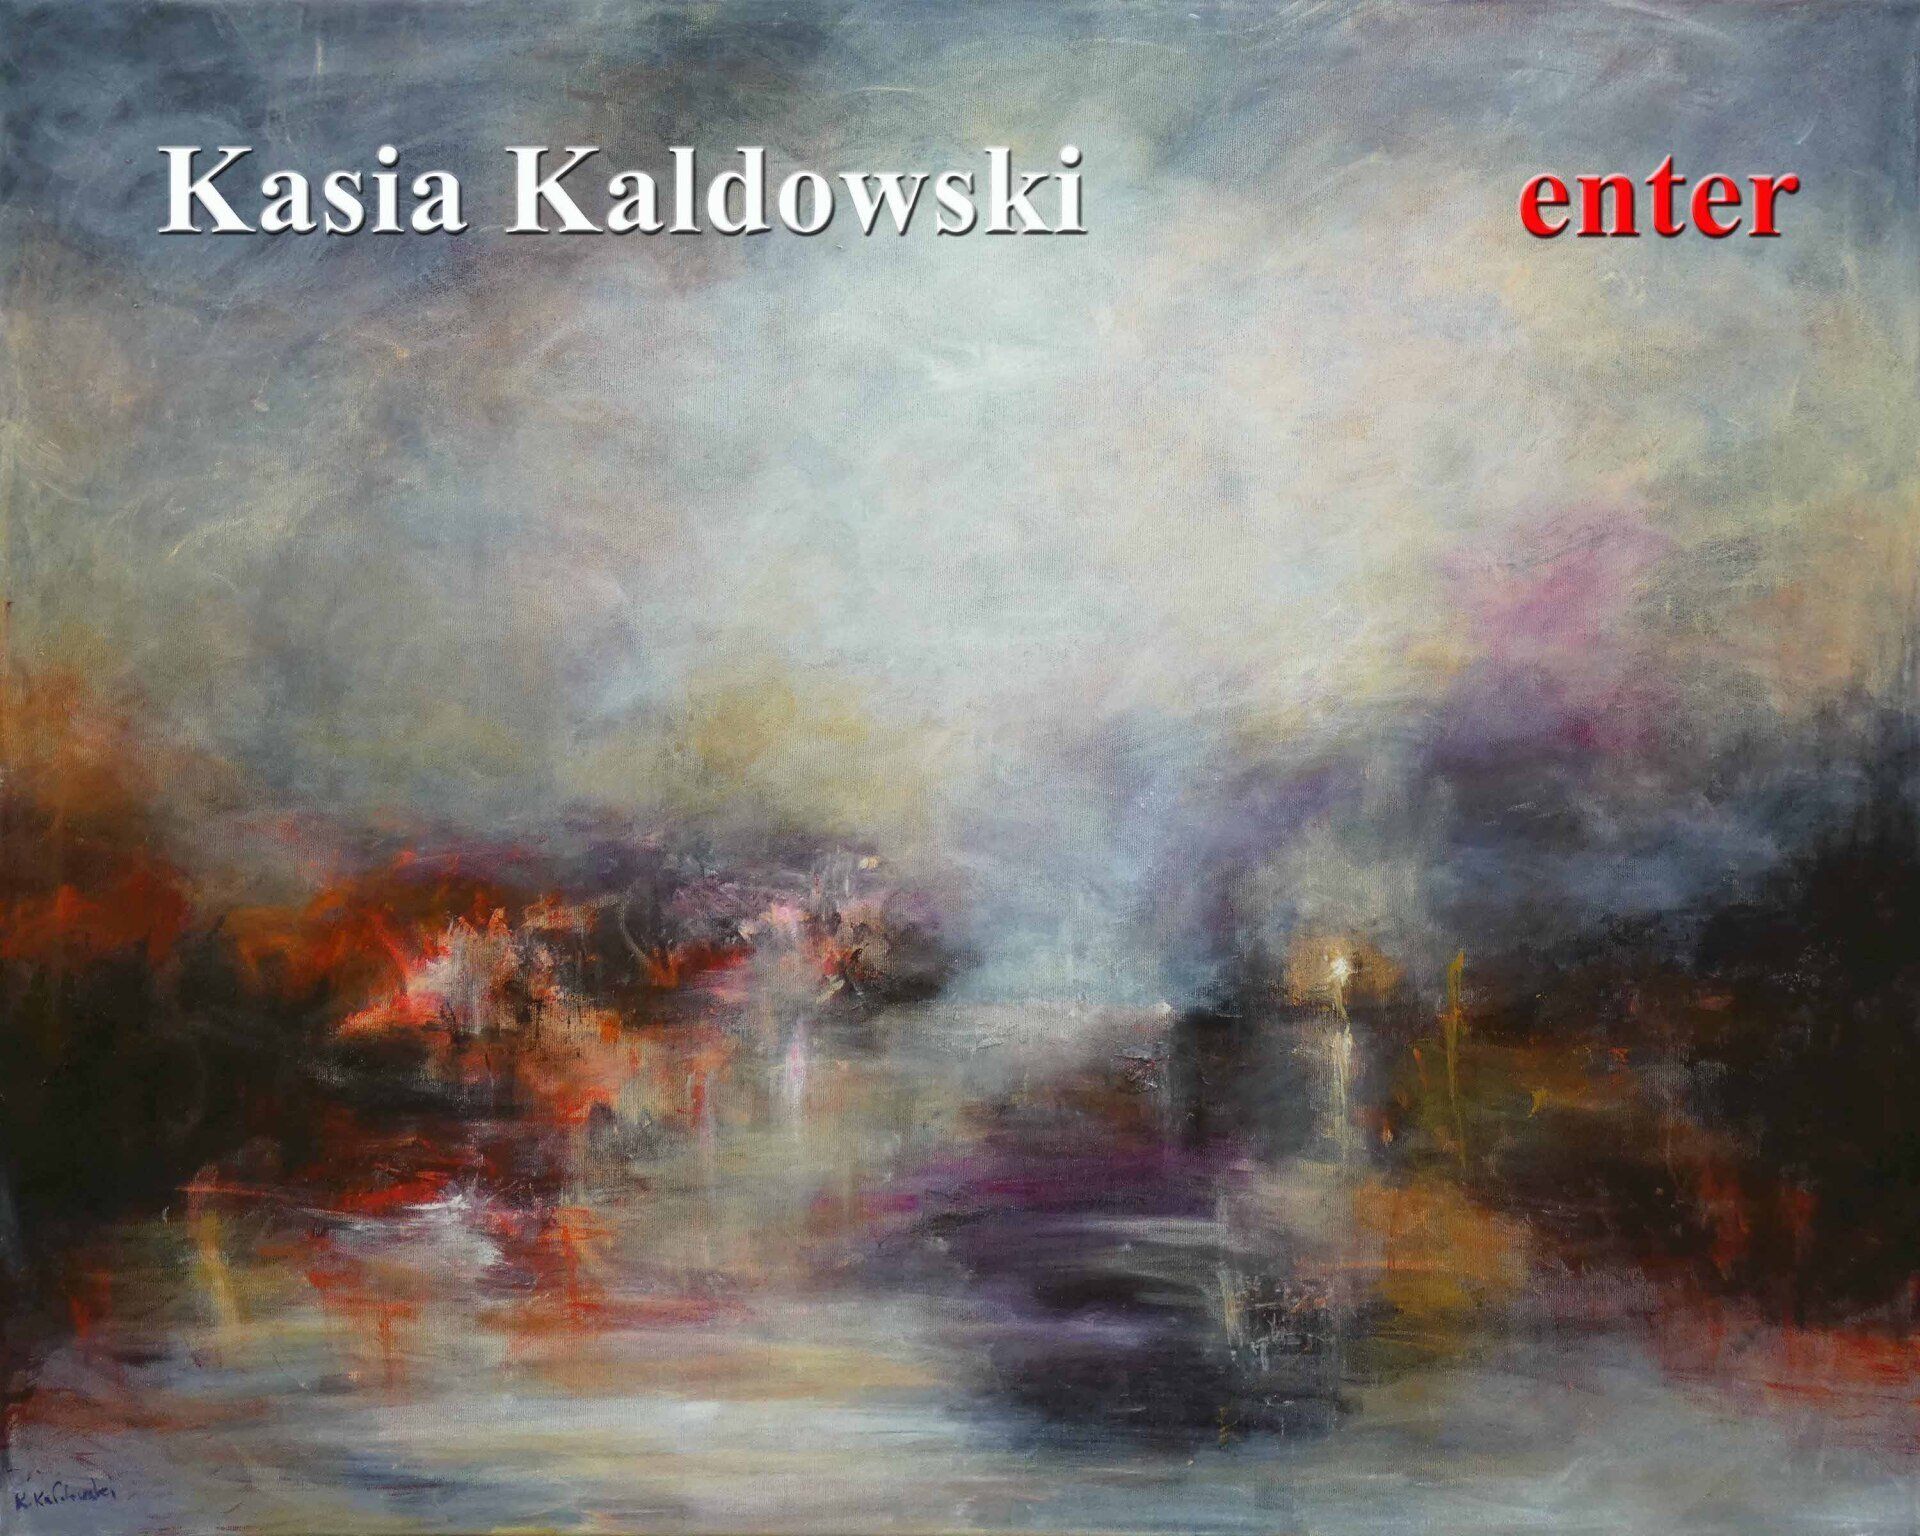 Kasia Kaldowski websitw